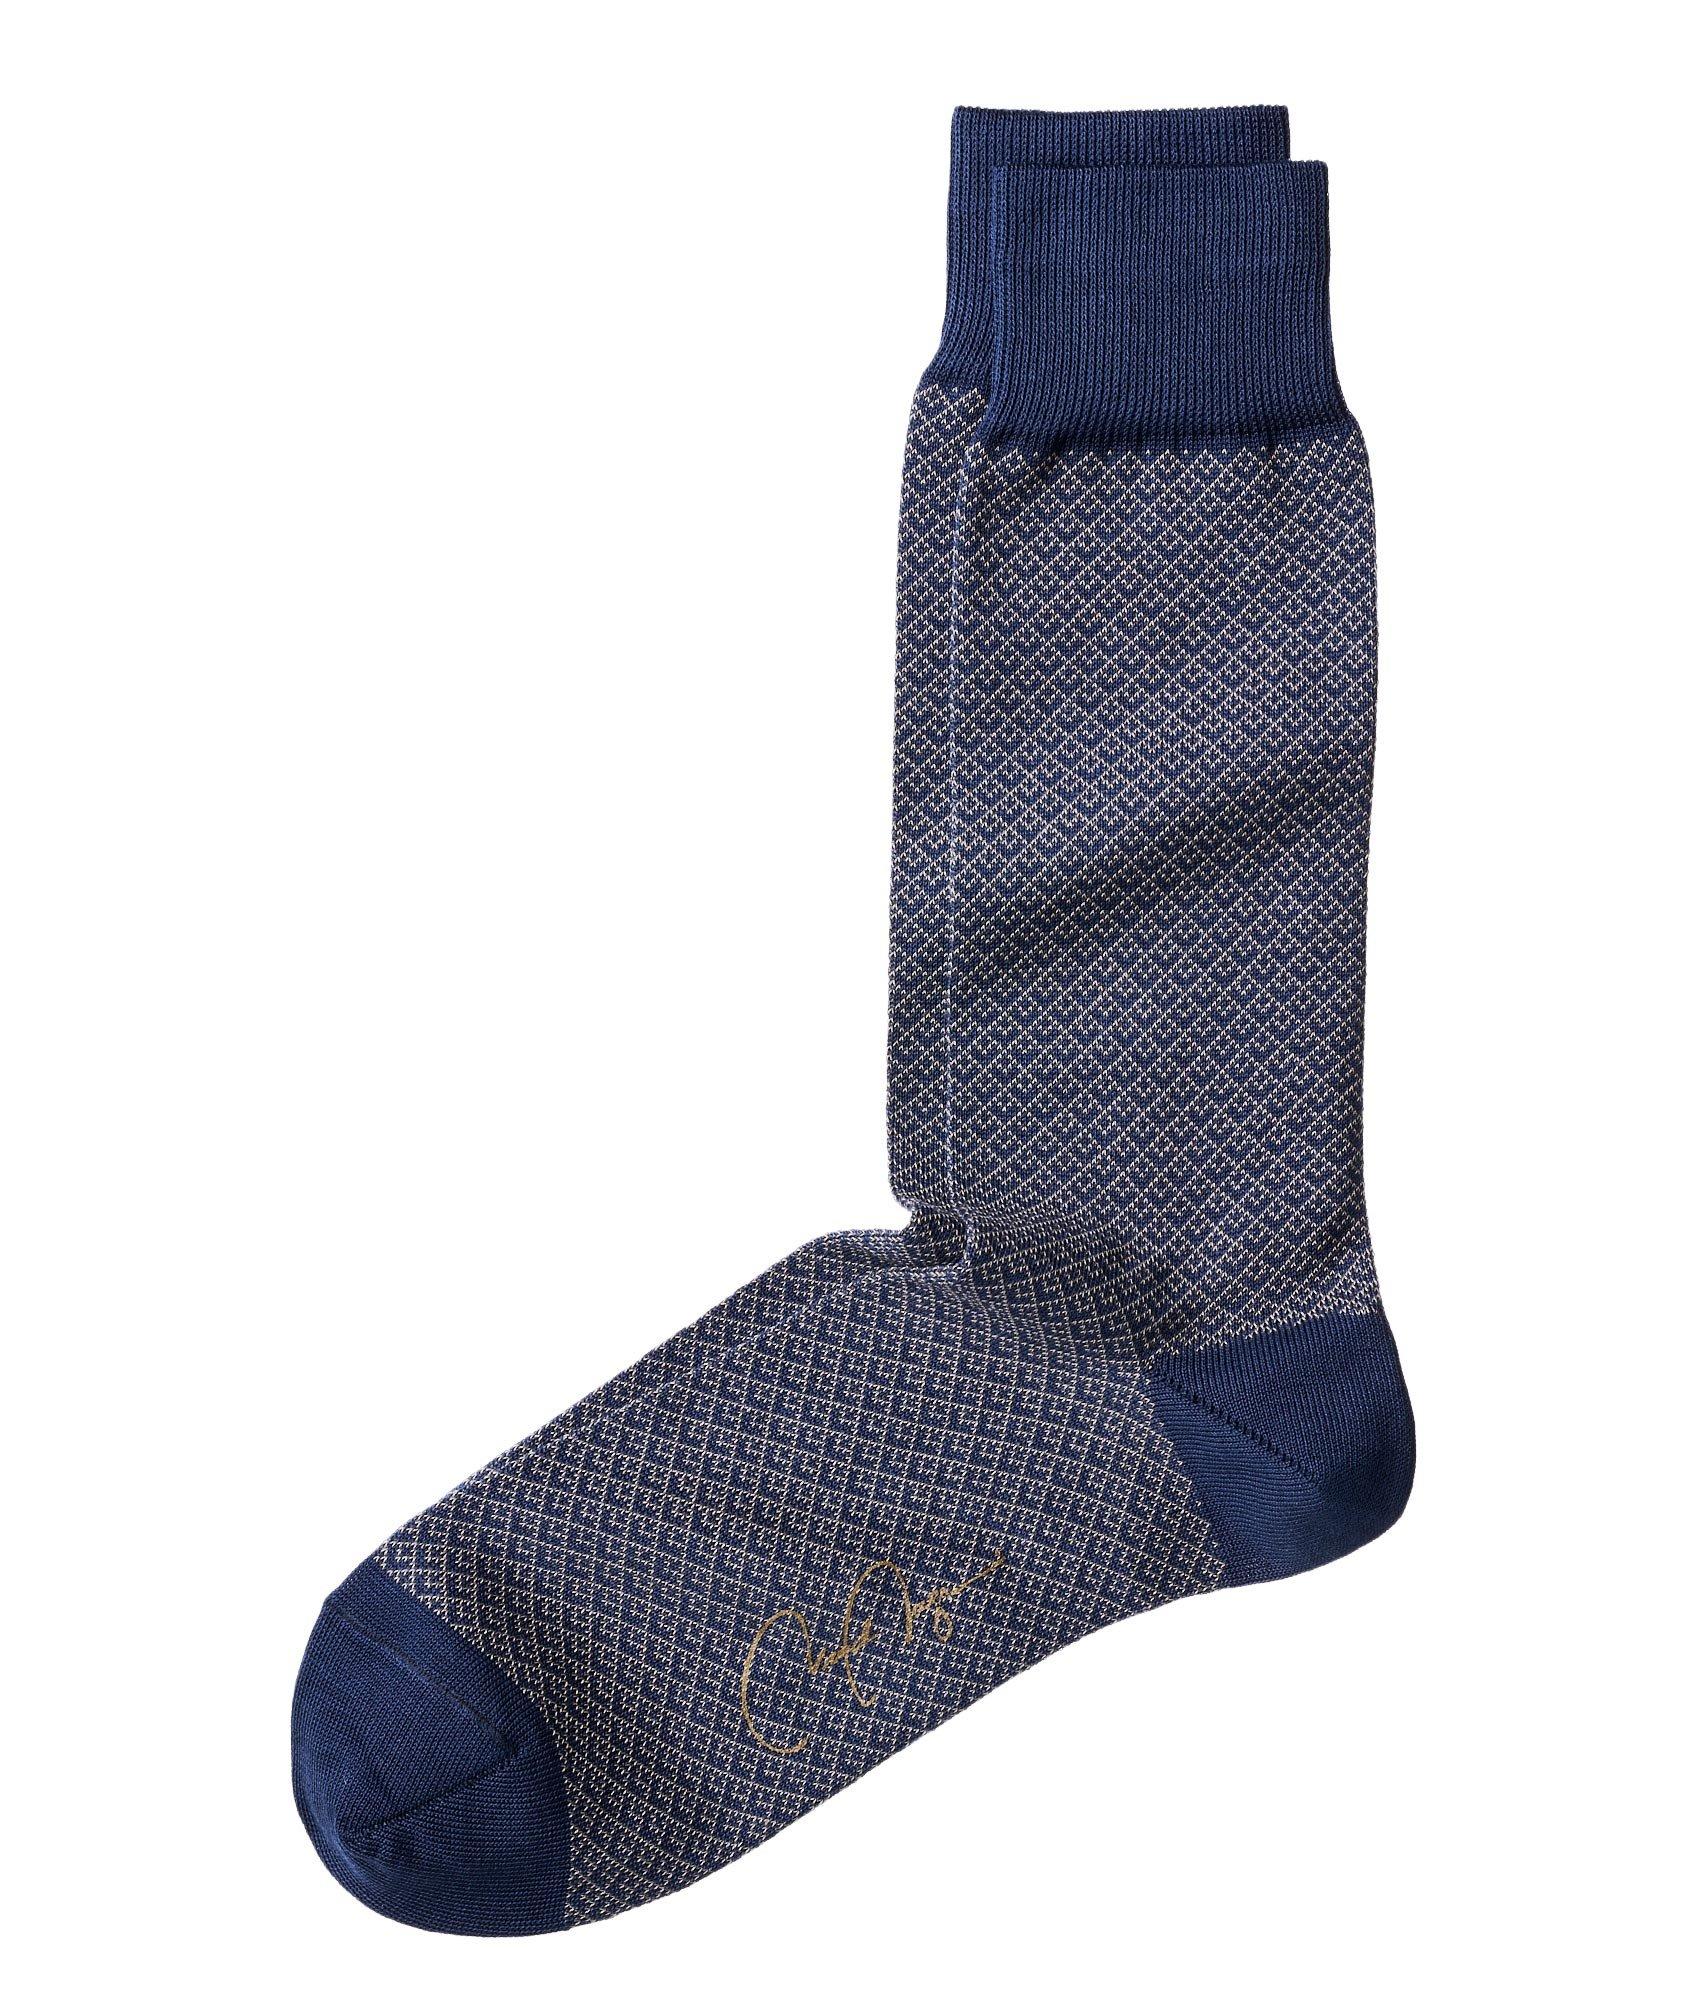 Printed Stretch Cotton-Blend Socks image 0